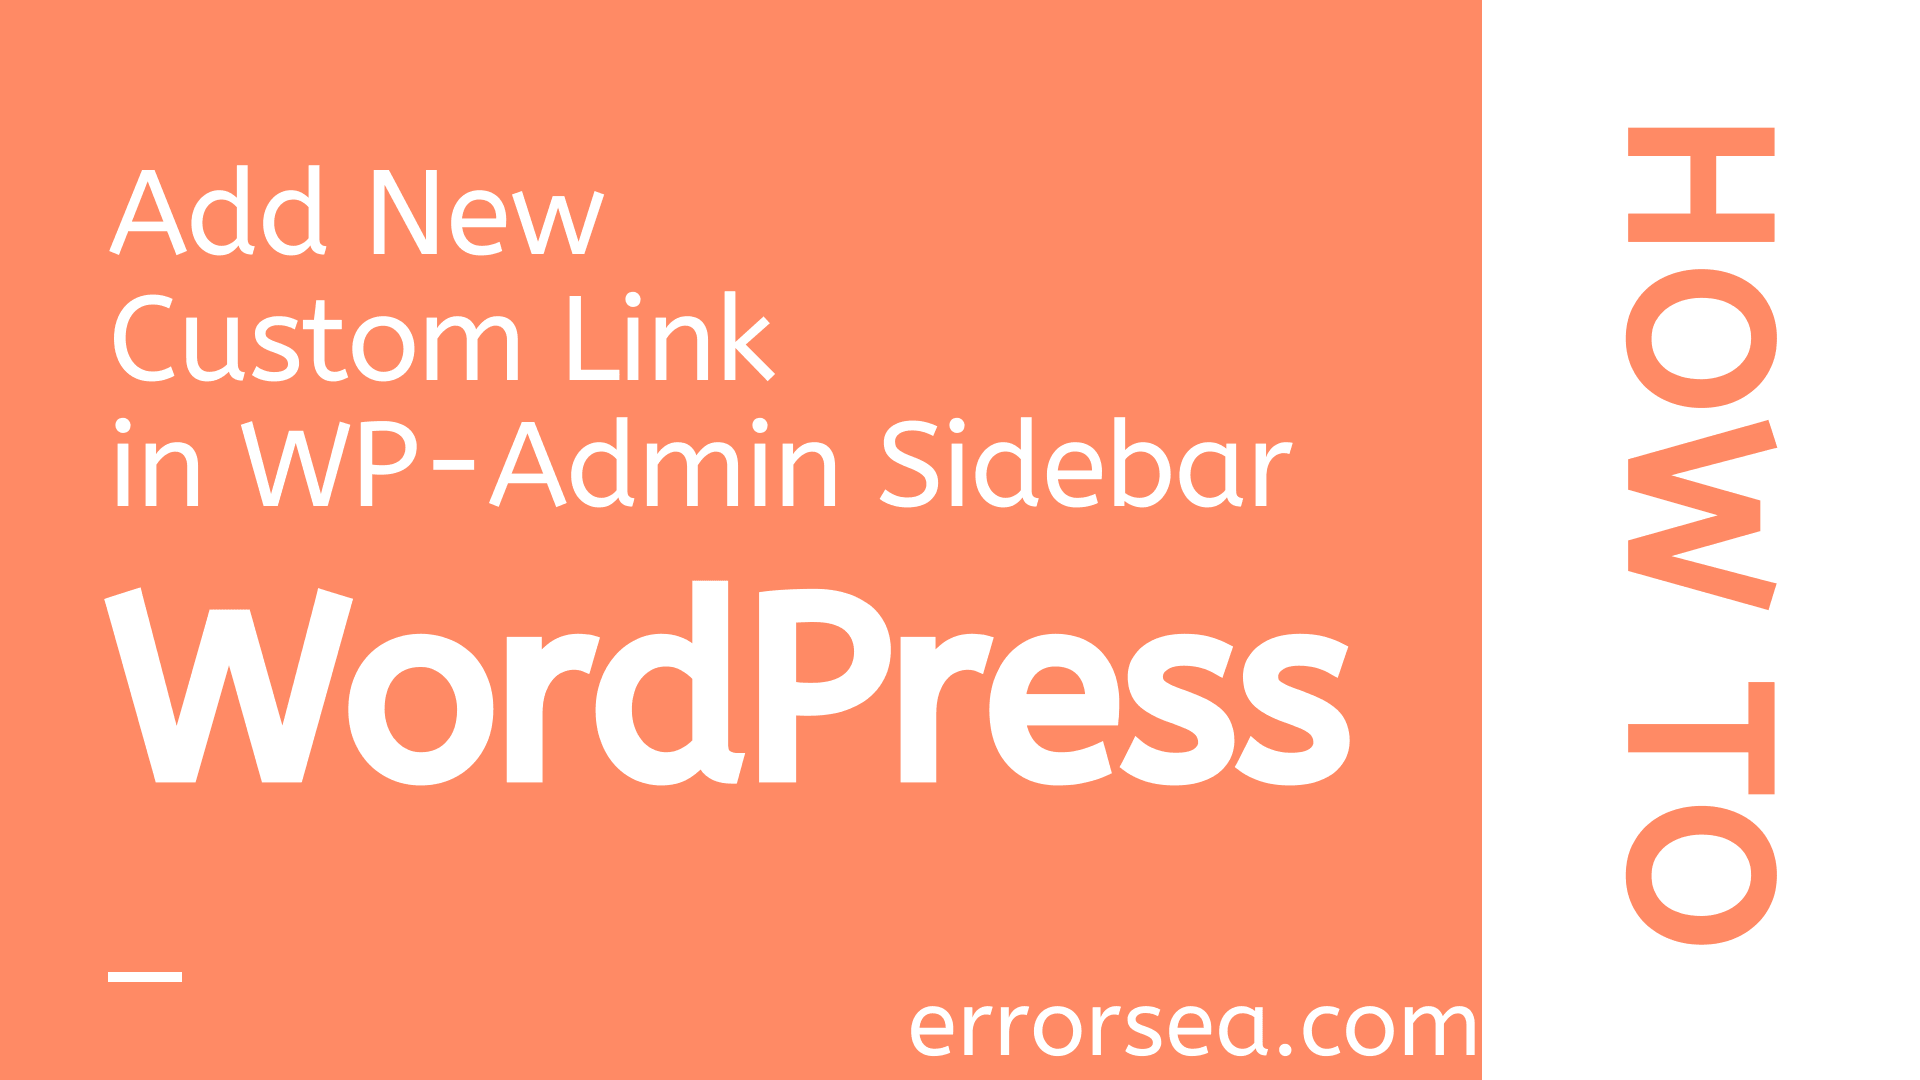 How to Add a New Custom Link in WordPress Sidebar